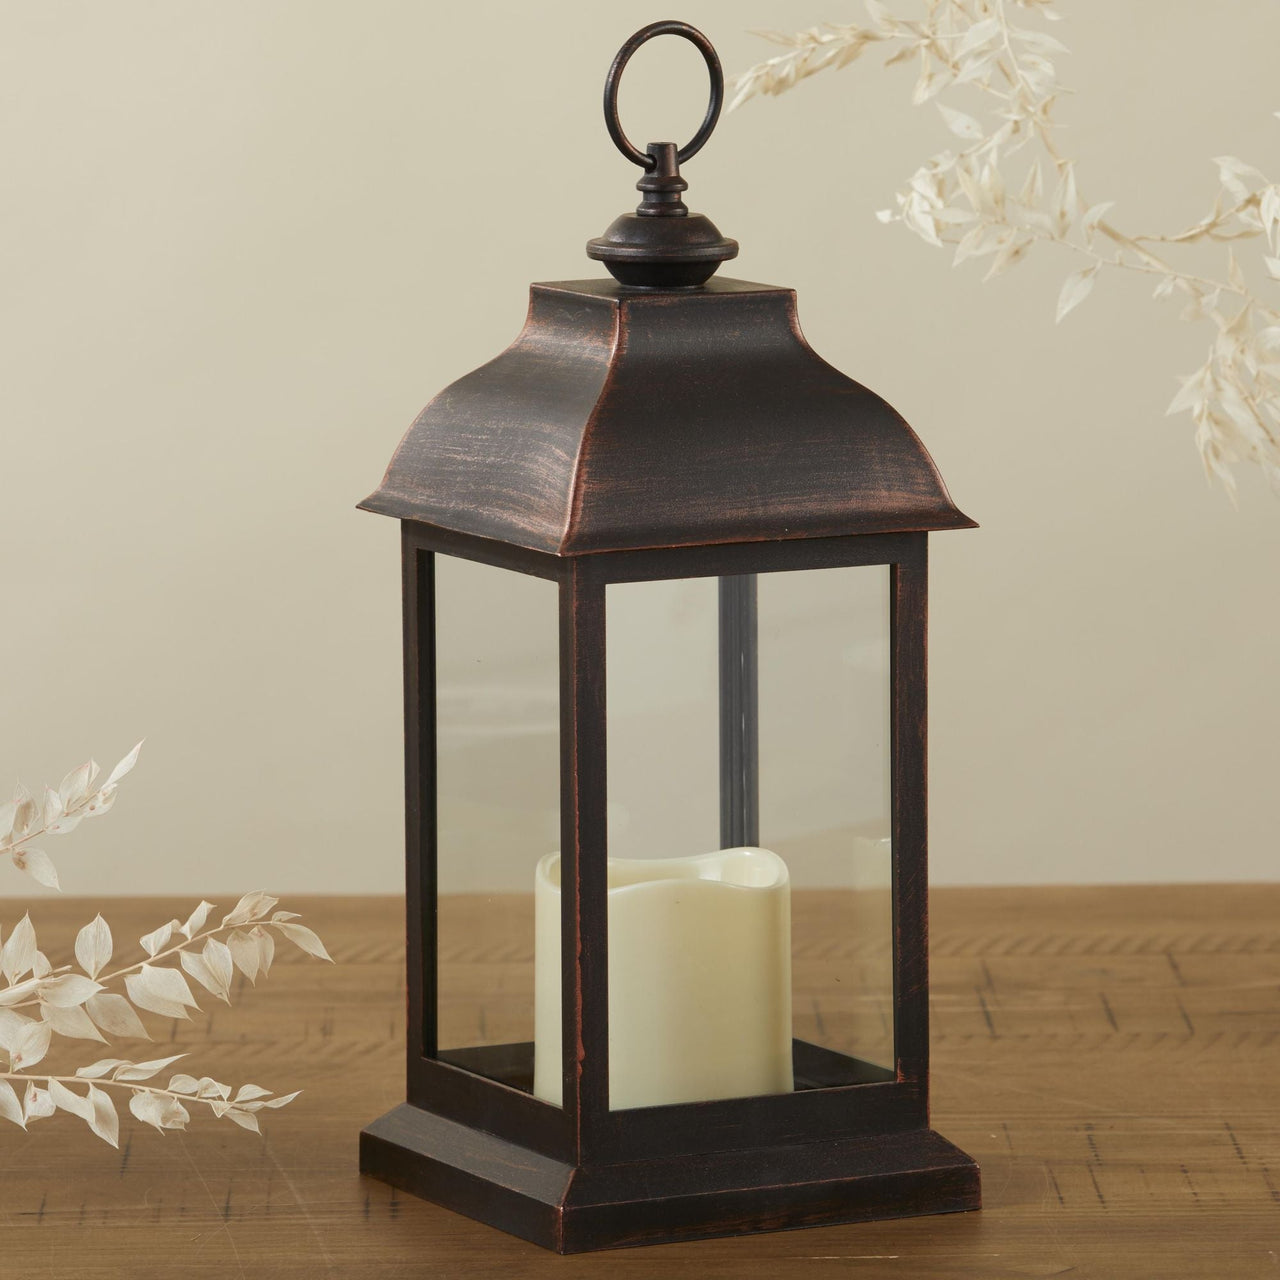 LED Vintage Decorative Copper Lantern - Manchester - Main Image | My Wedding Favors